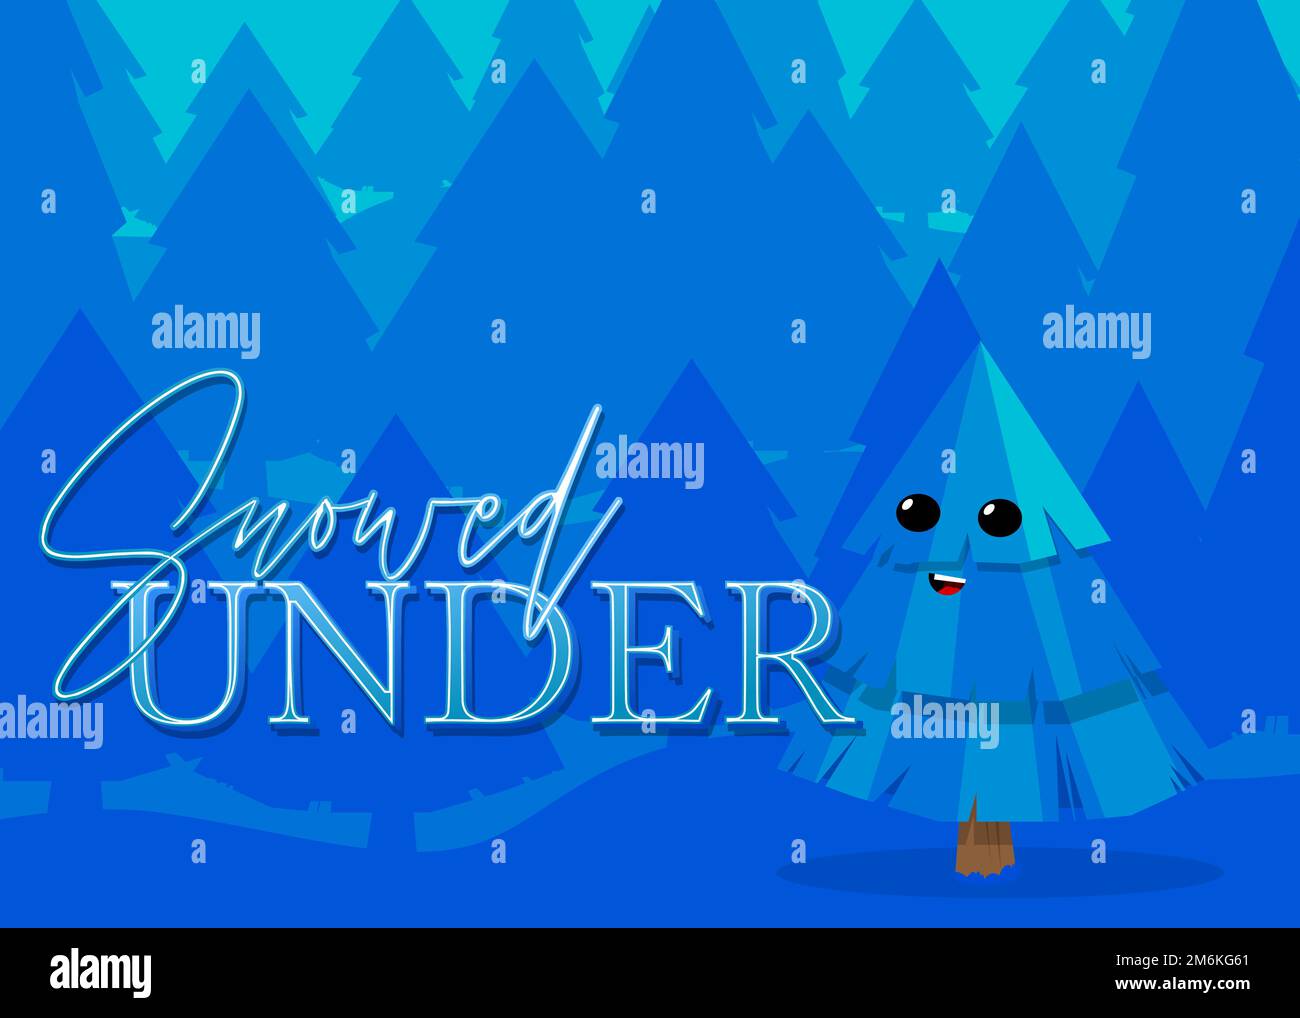 Pine Tree with Snowed Under text. Winter event vector cartoon illustration. Stock Vector